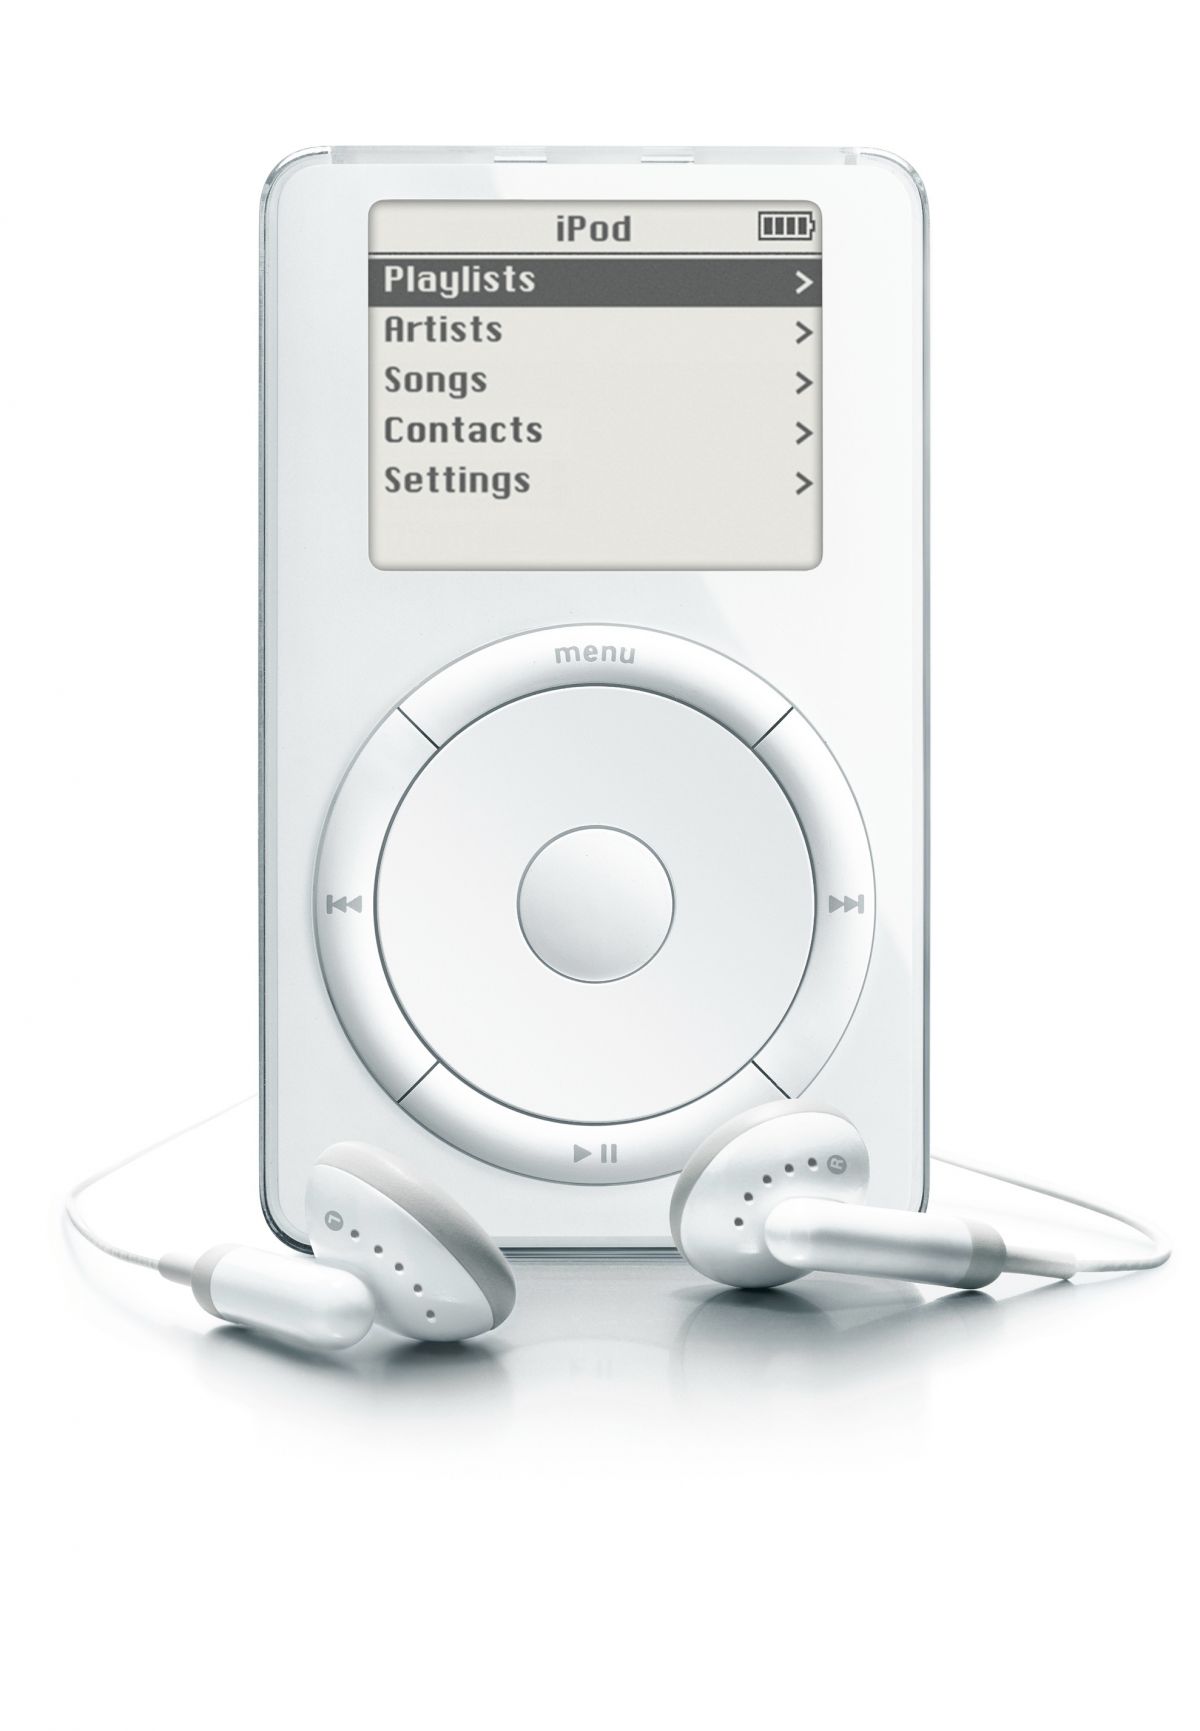 Le premier iPod sorti en 2001 // Source : Apple